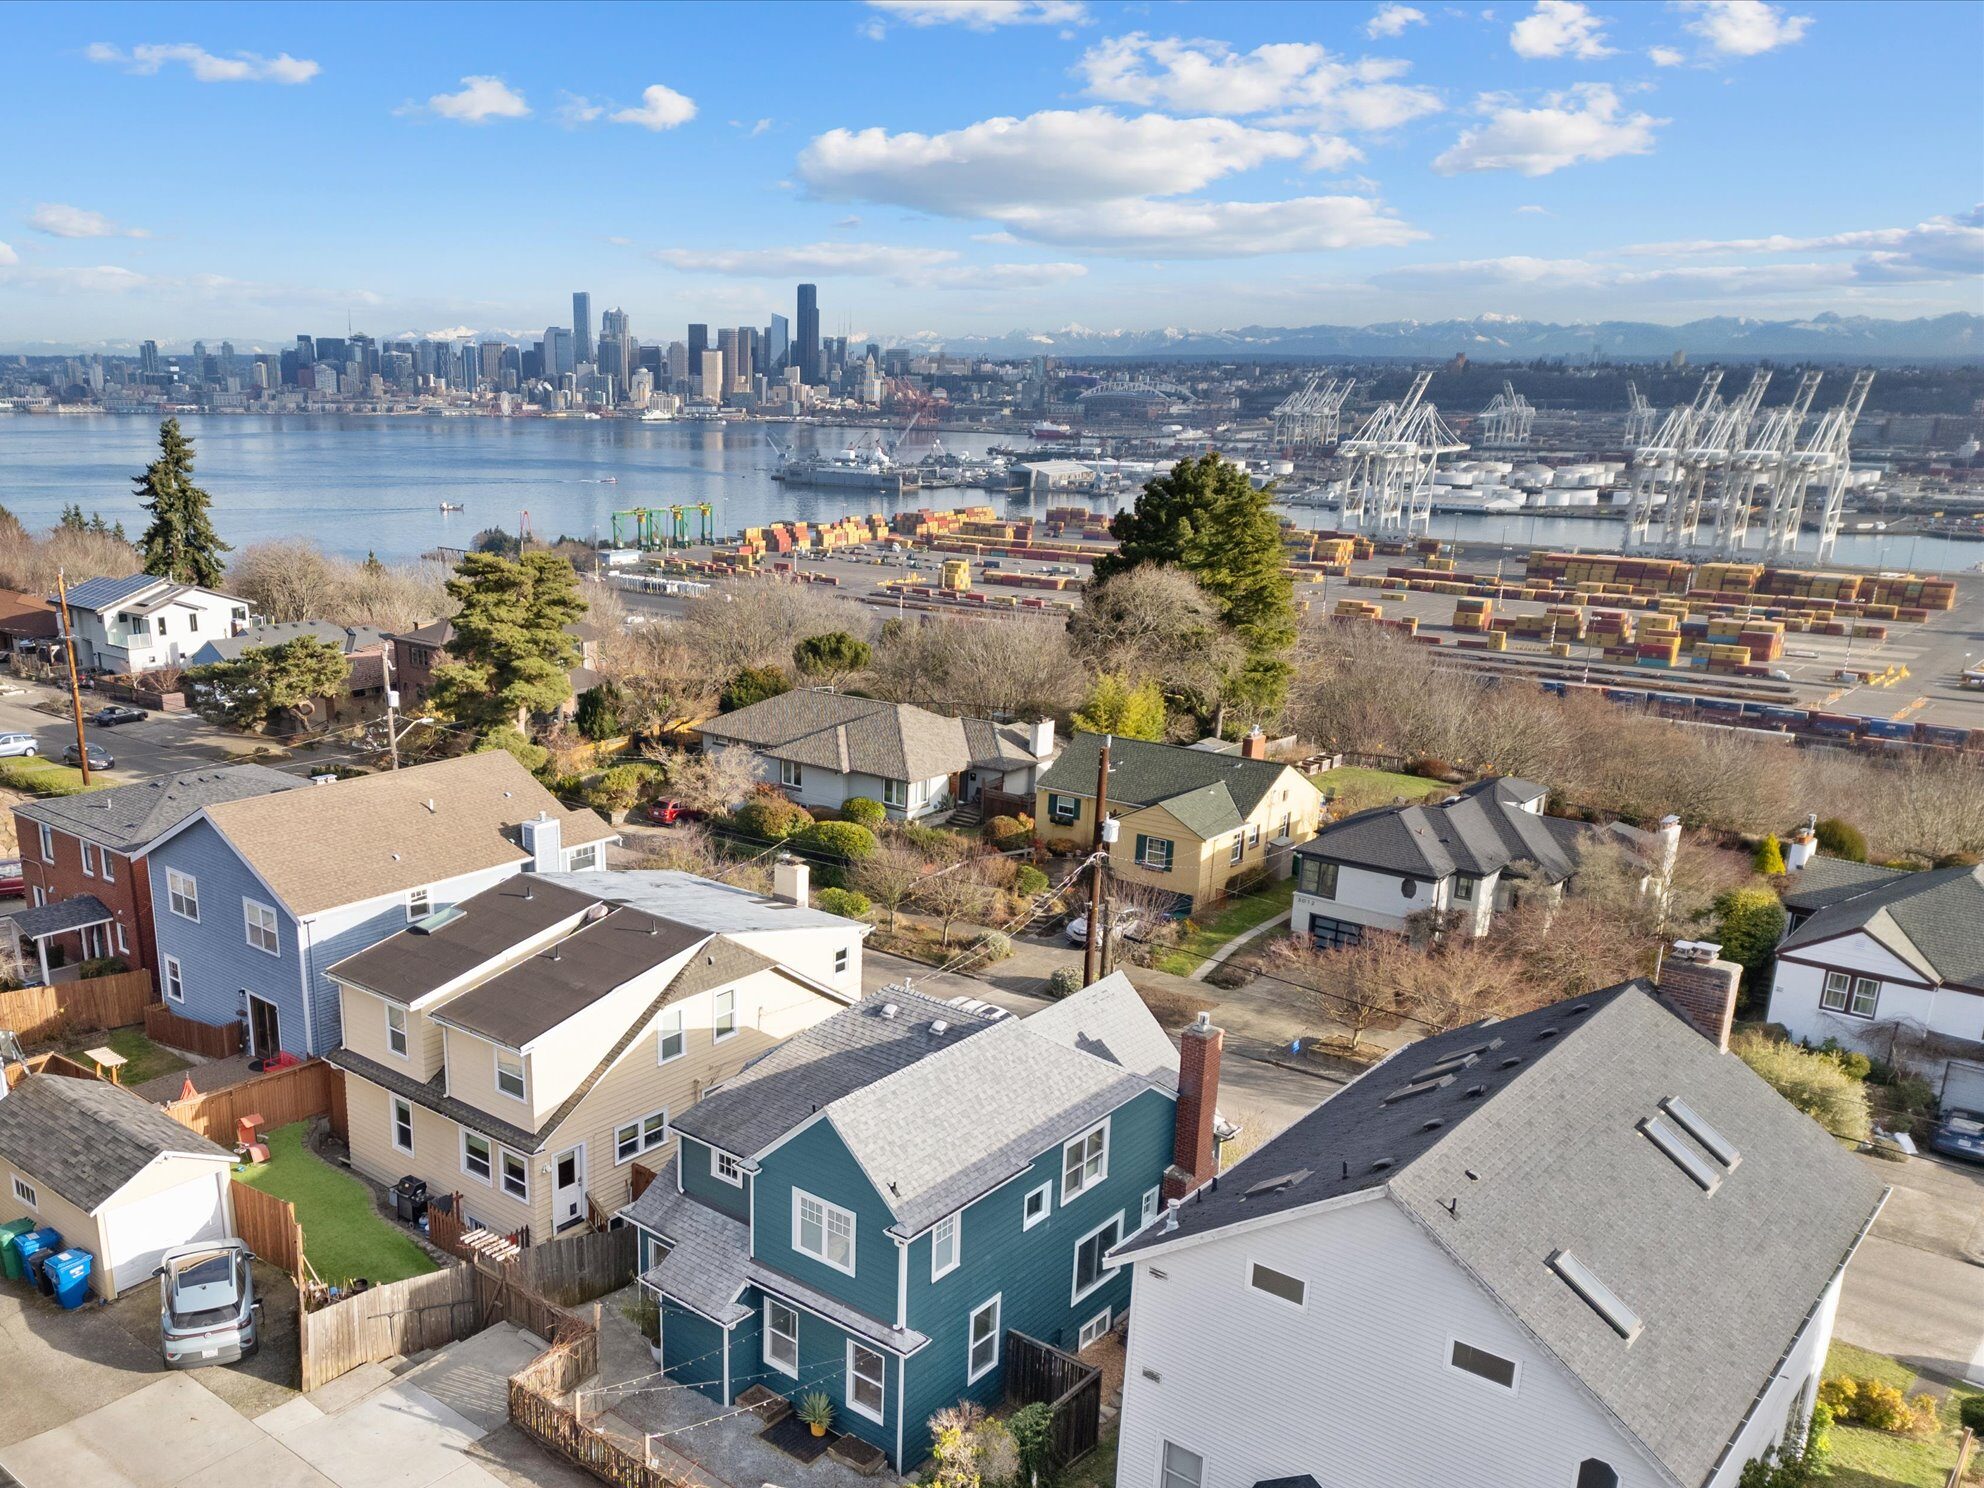 View of homes near Alki Beach, West Seattle